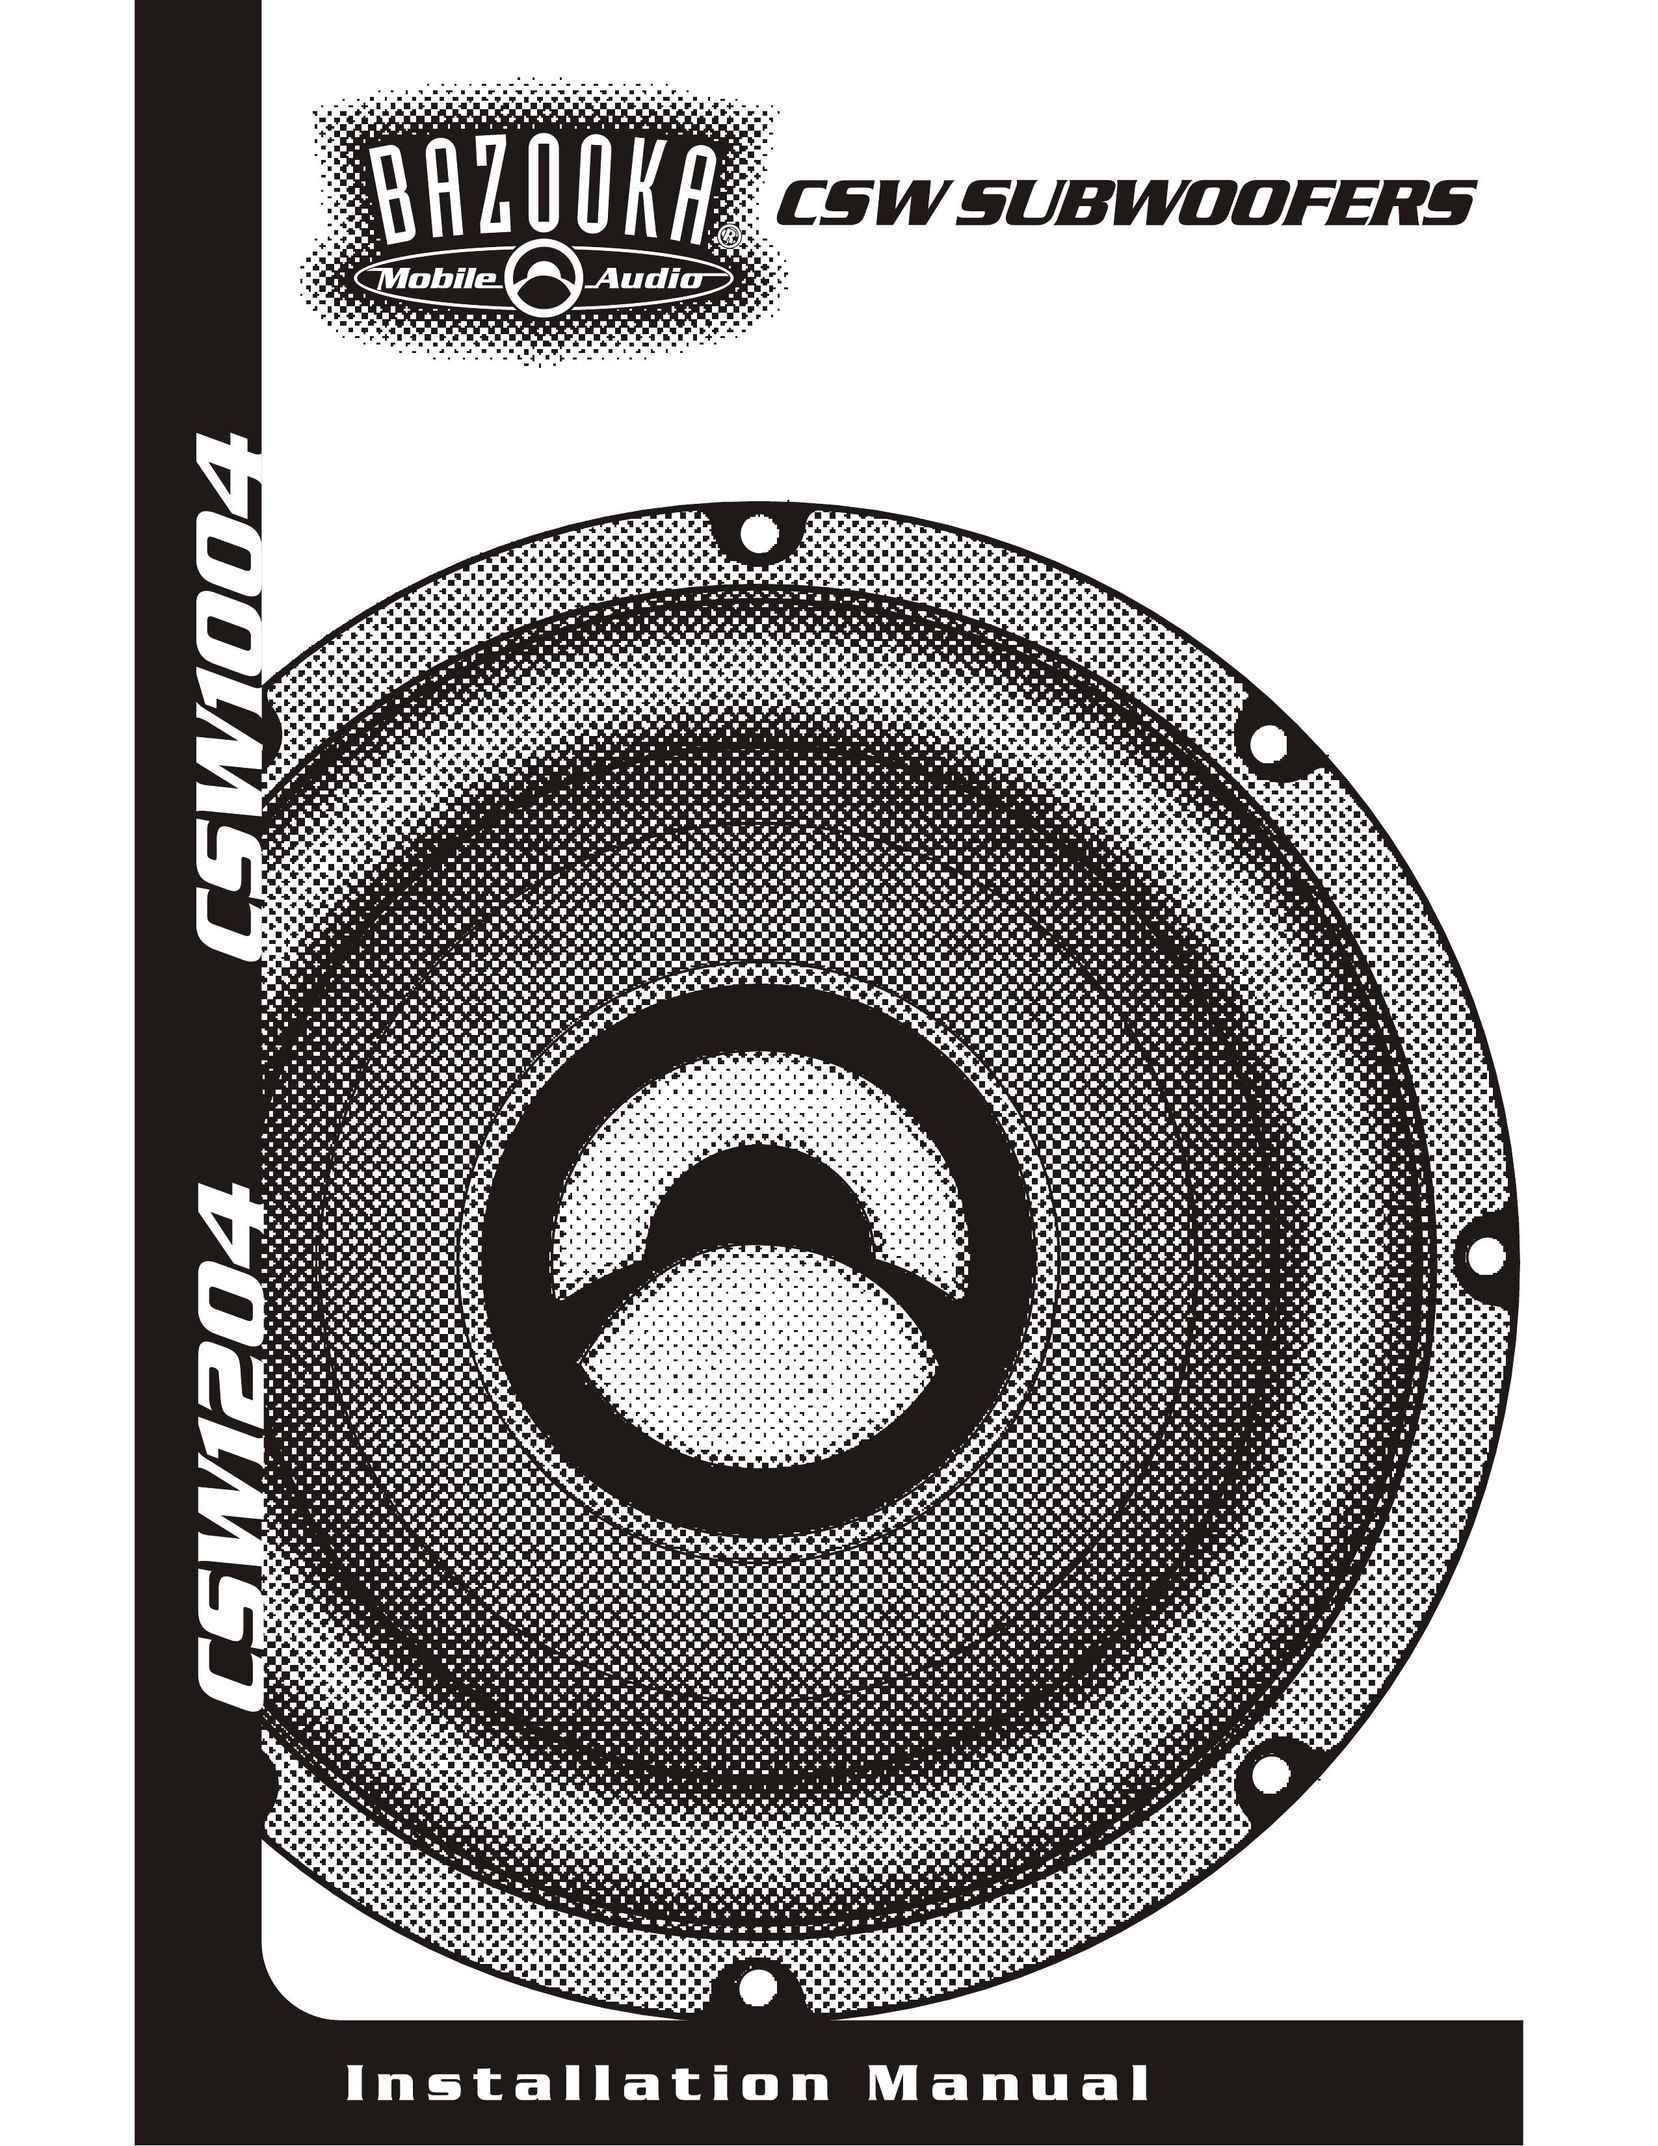 Bazooka CSW1204 Speaker User Manual